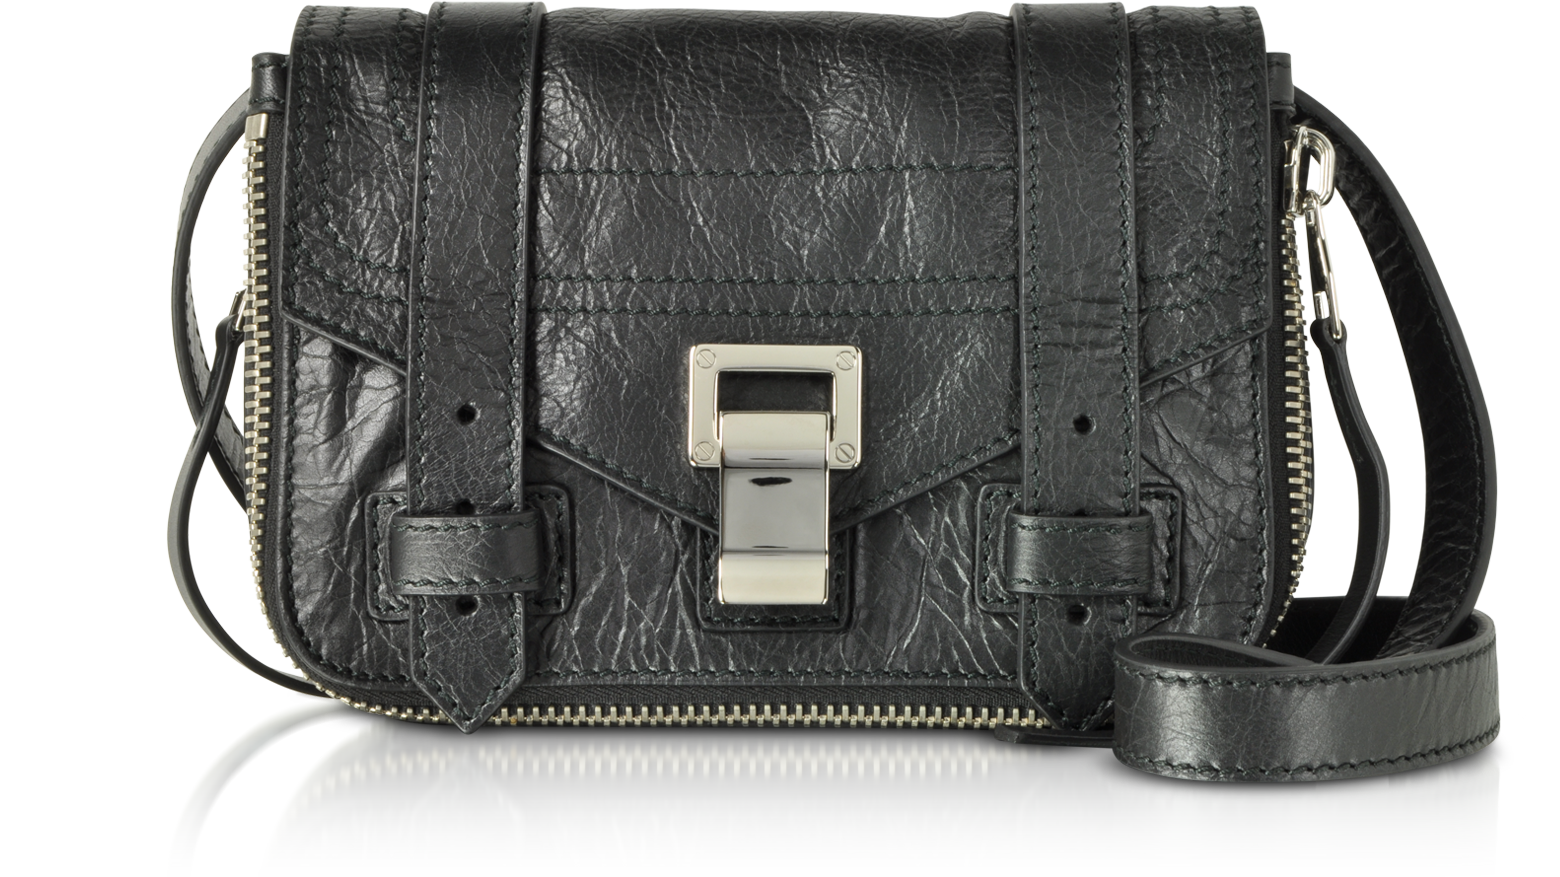 Cross body bags Proenza Schouler - Ps1 tiny handbag - H000912078